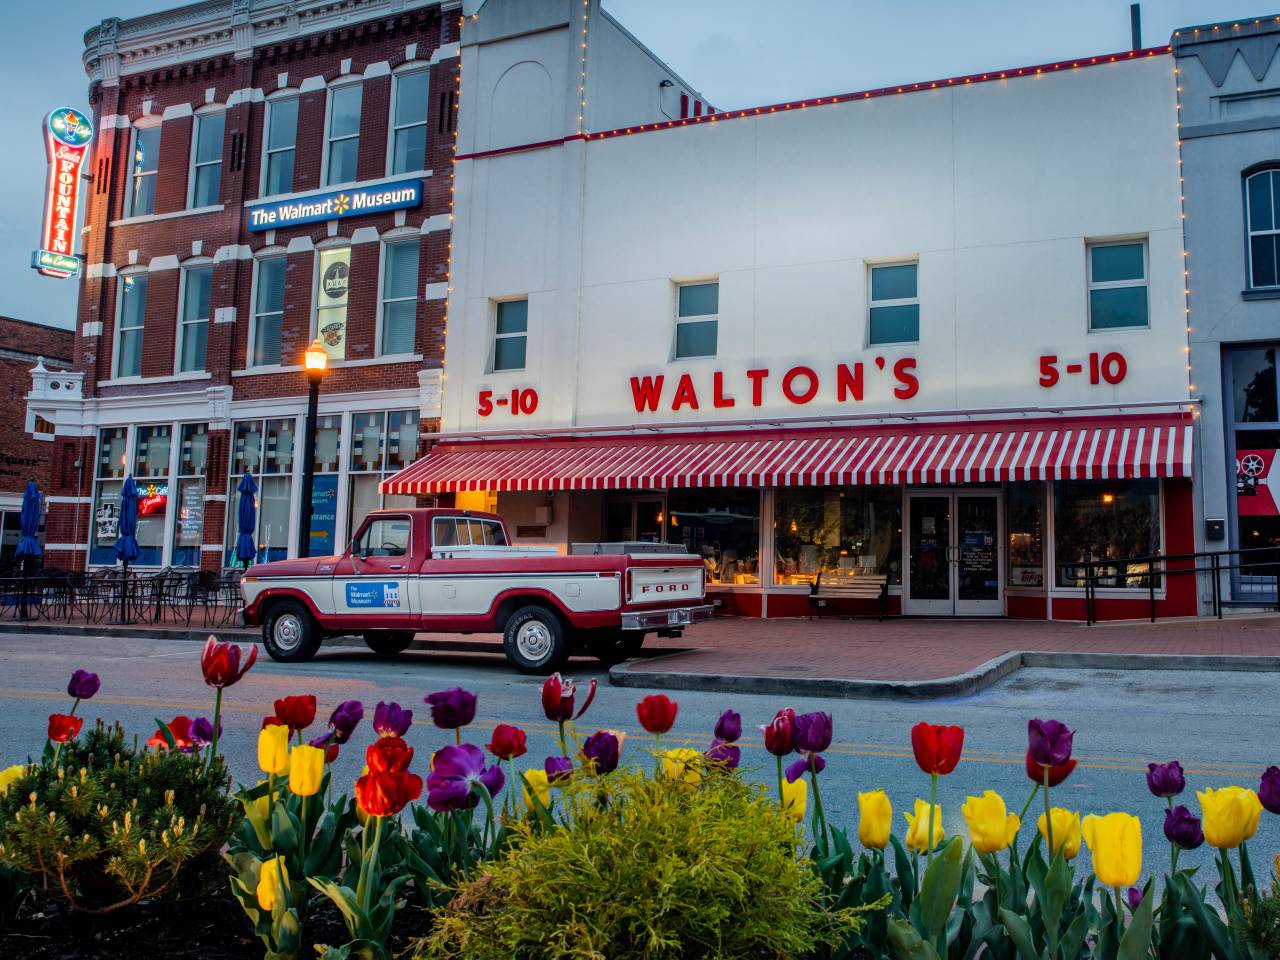 Walton's and Walmart Museum in Bentonville, AR